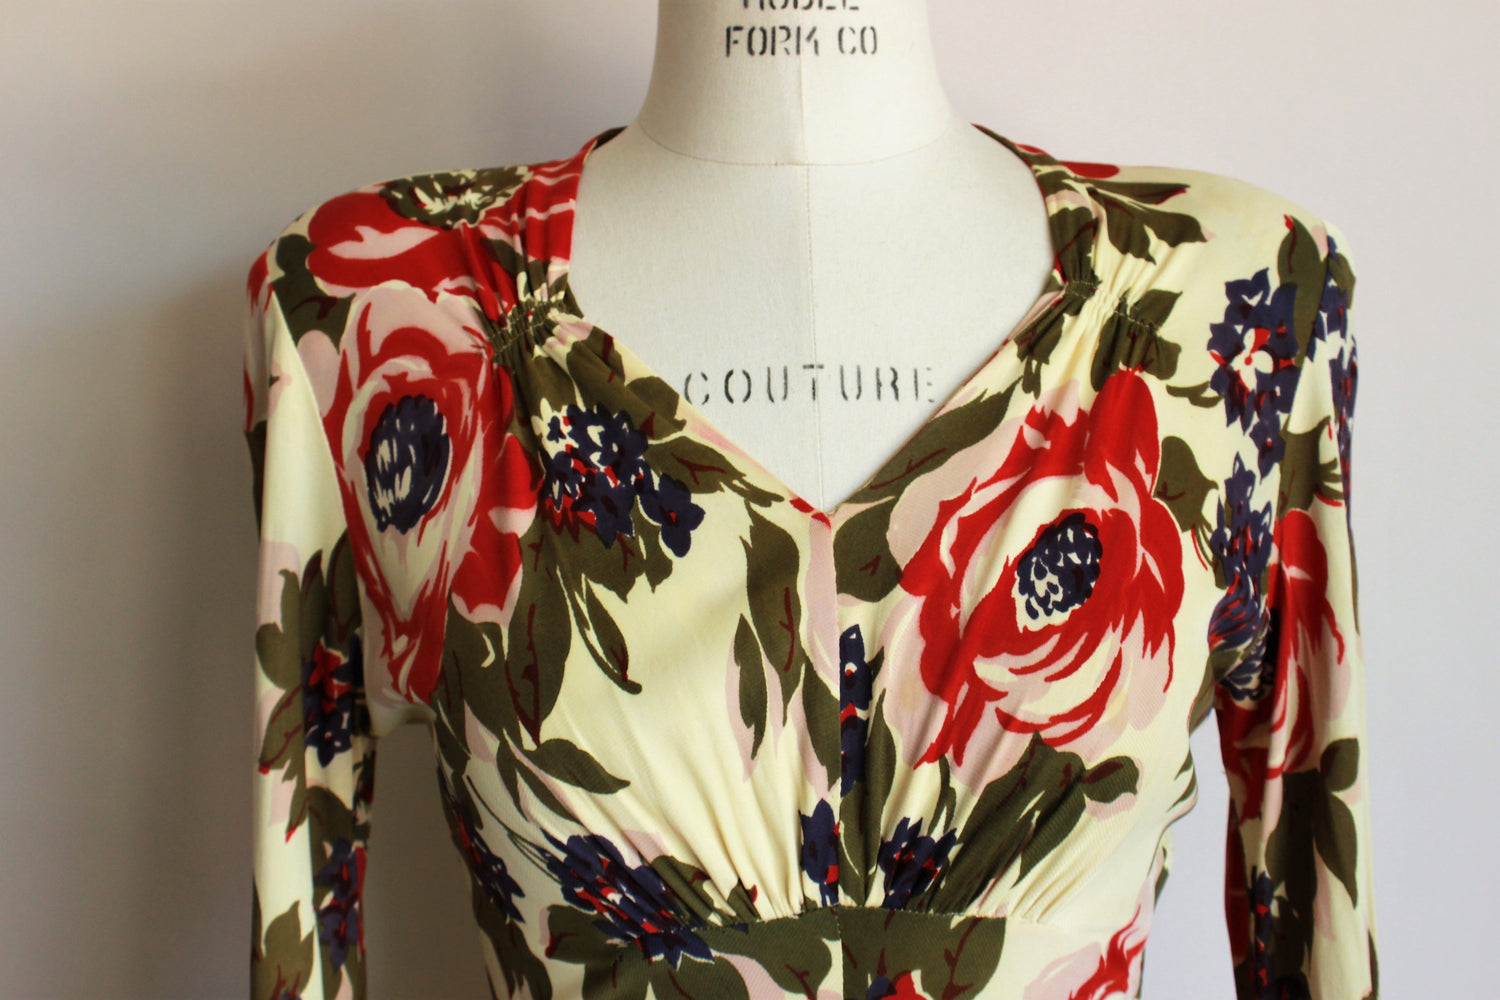 Vintage 1940s Nylon Floral Print Dress